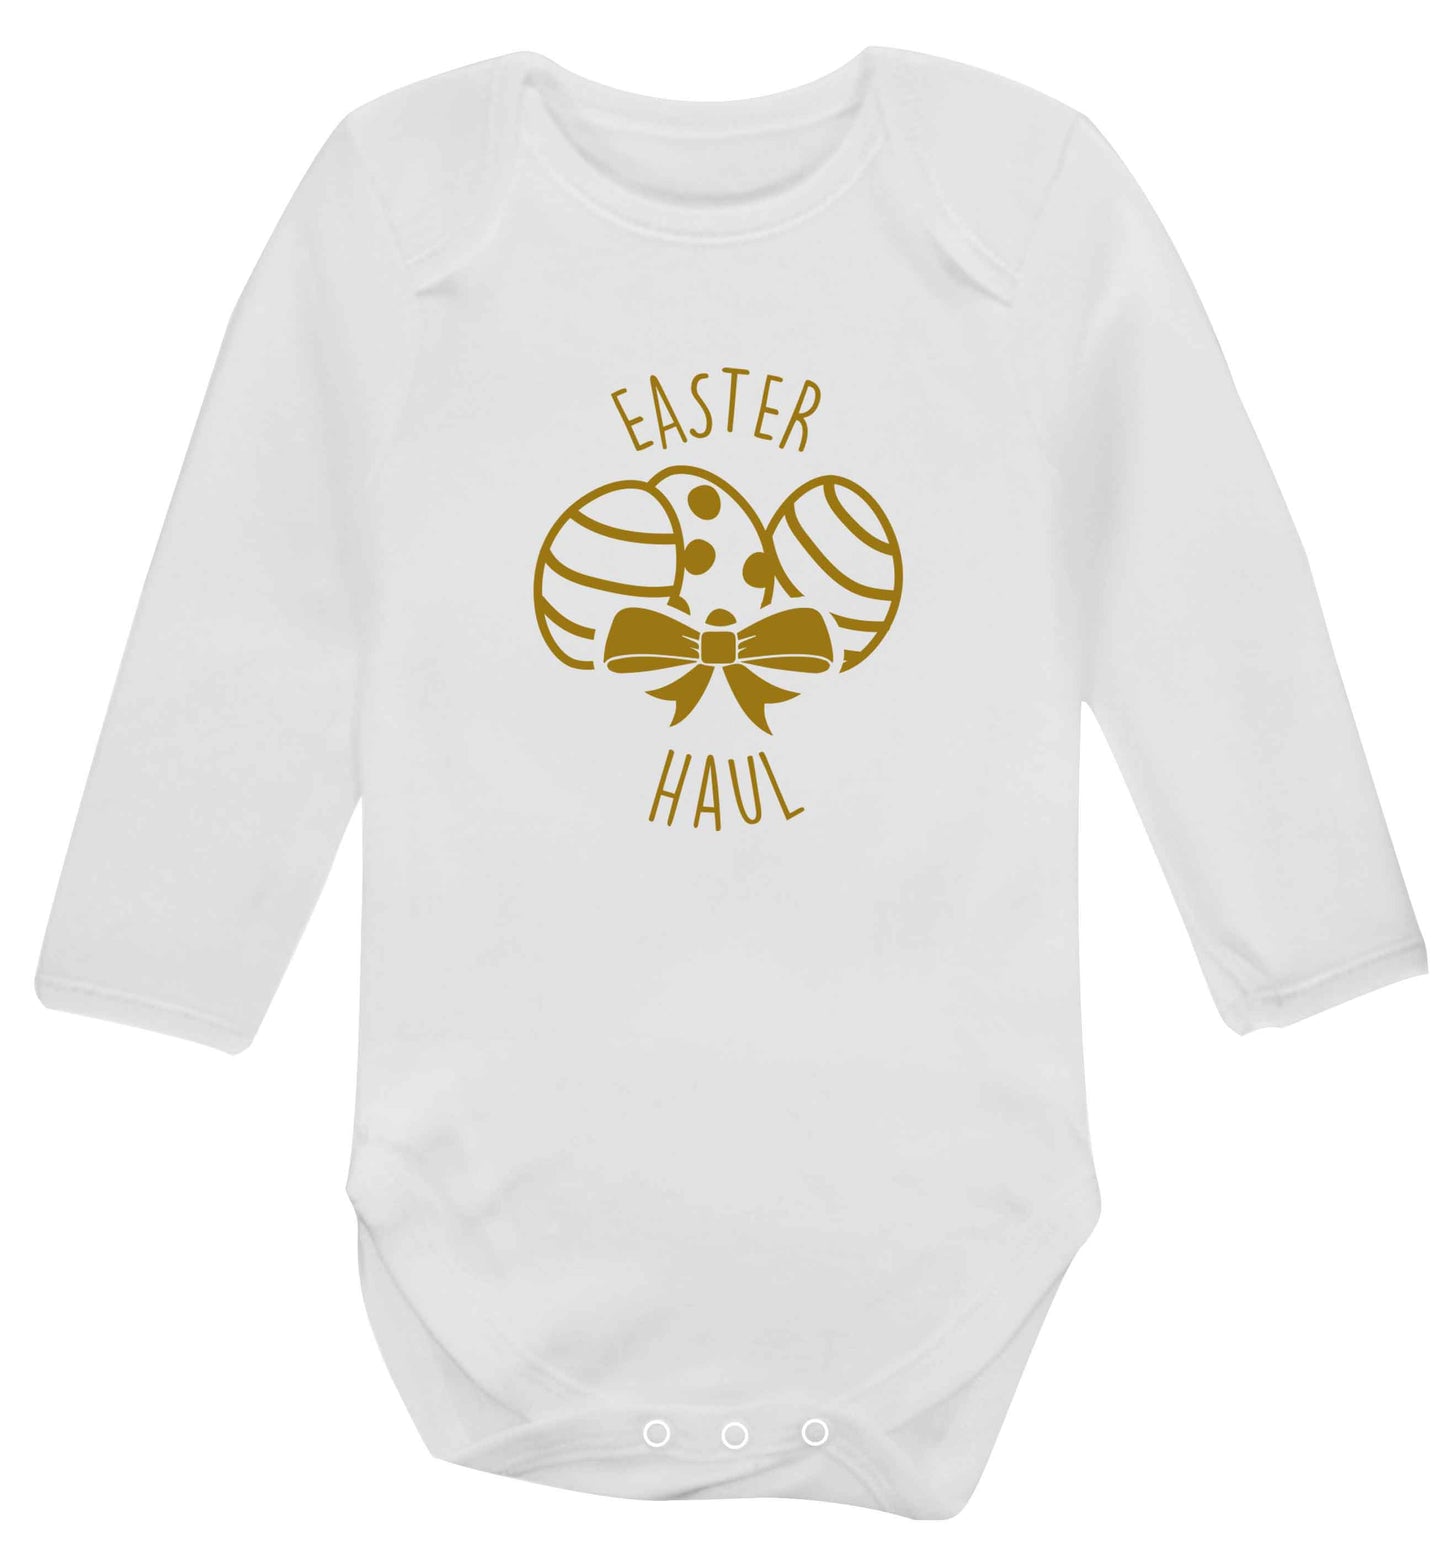 Easter haul baby vest long sleeved white 6-12 months